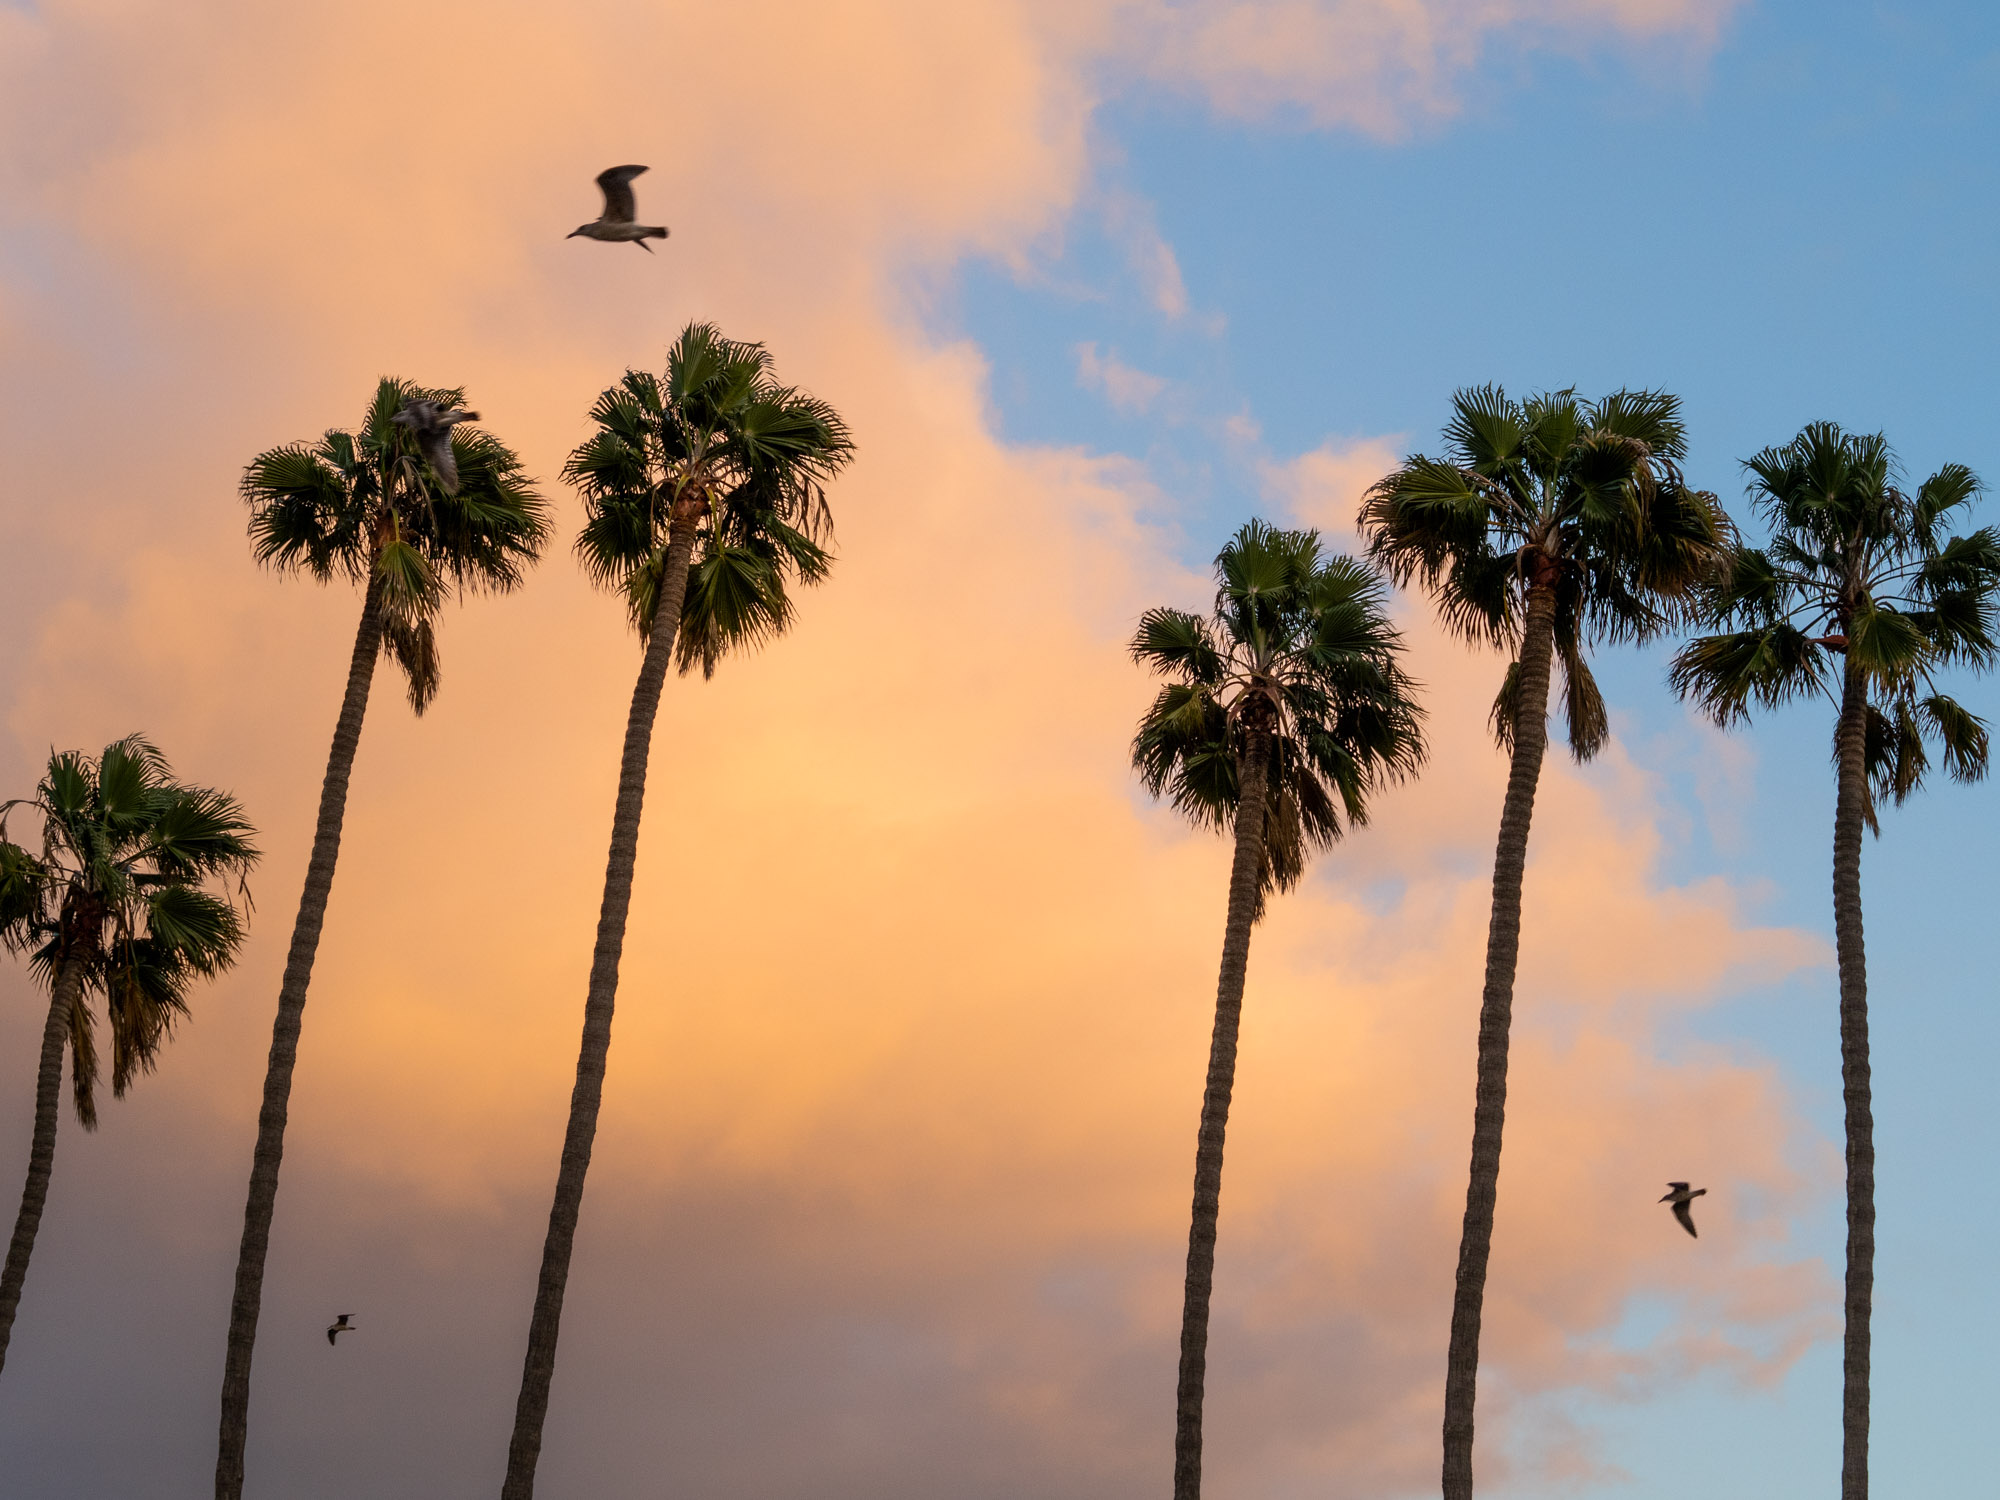 Santa Barbara Sunset Sky with Palms and Birds | Travel Photography by Carla Gabriel Garcia